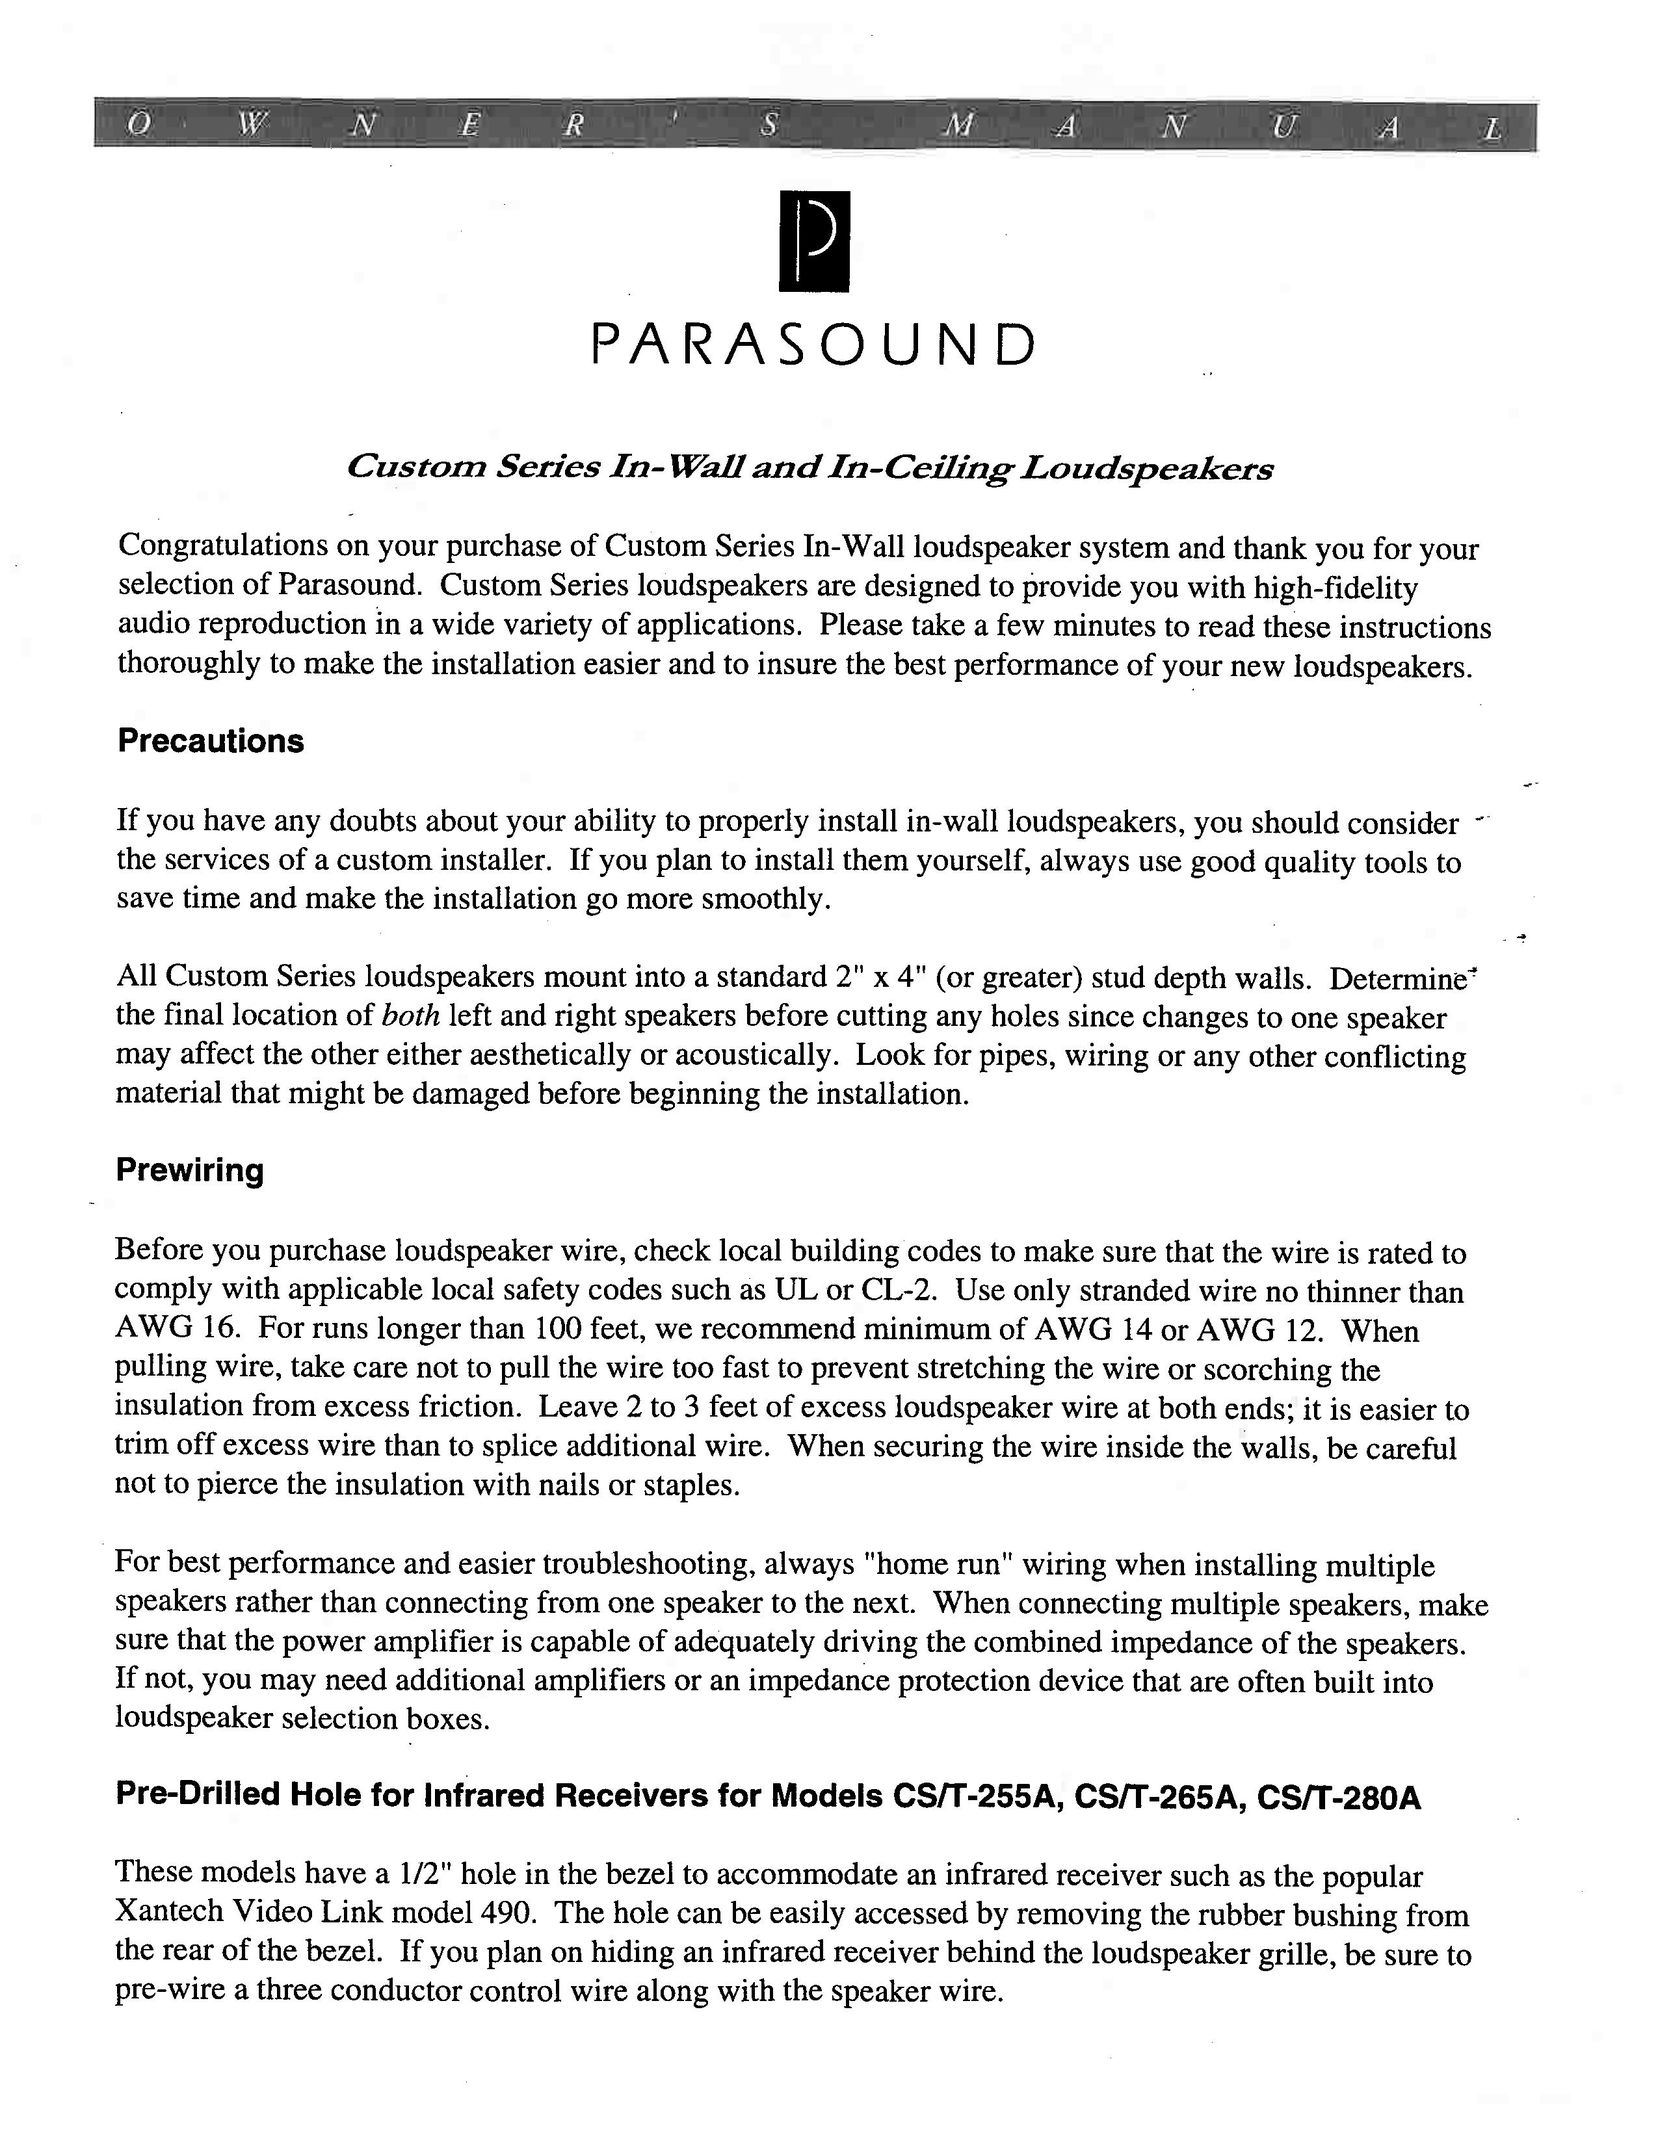 Parasound CS/T-280A Speaker User Manual